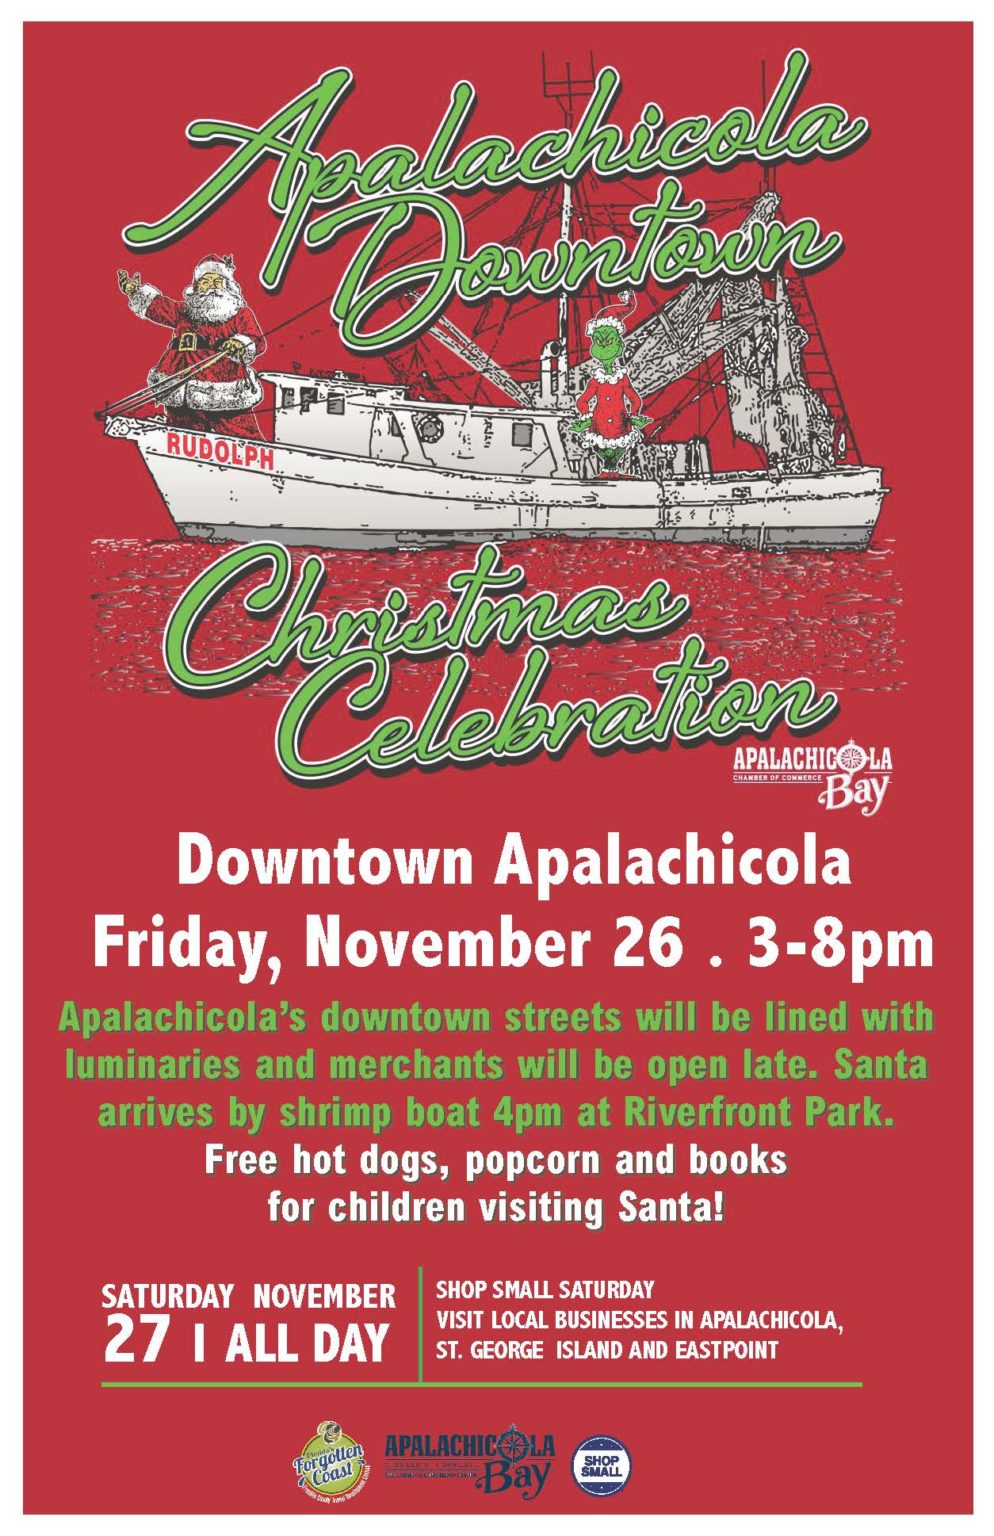 Apalachicola Downtown Christmas Celebration Apalachicola, St.